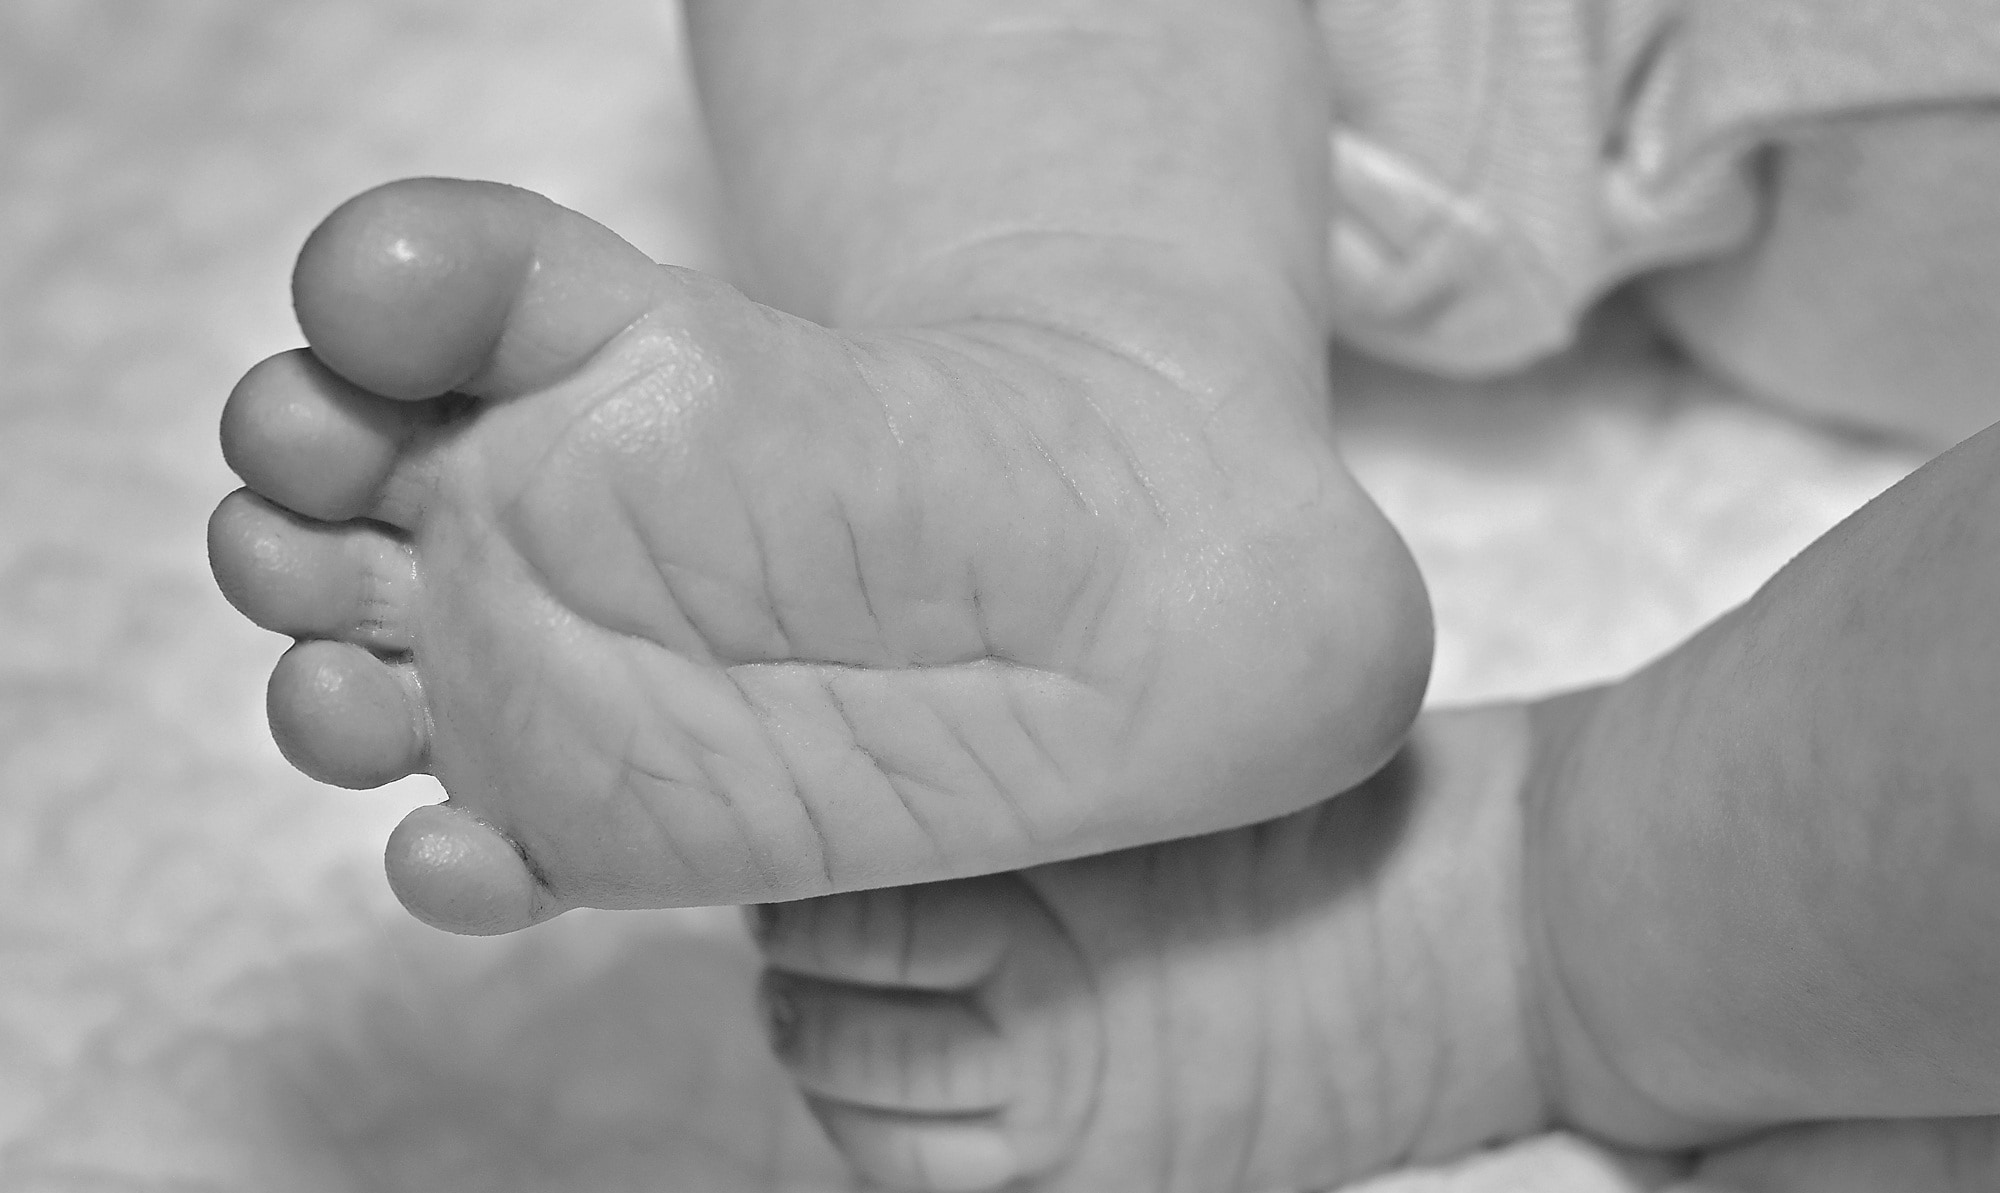 Feet Newborn Baby Small Human Body Part Hand